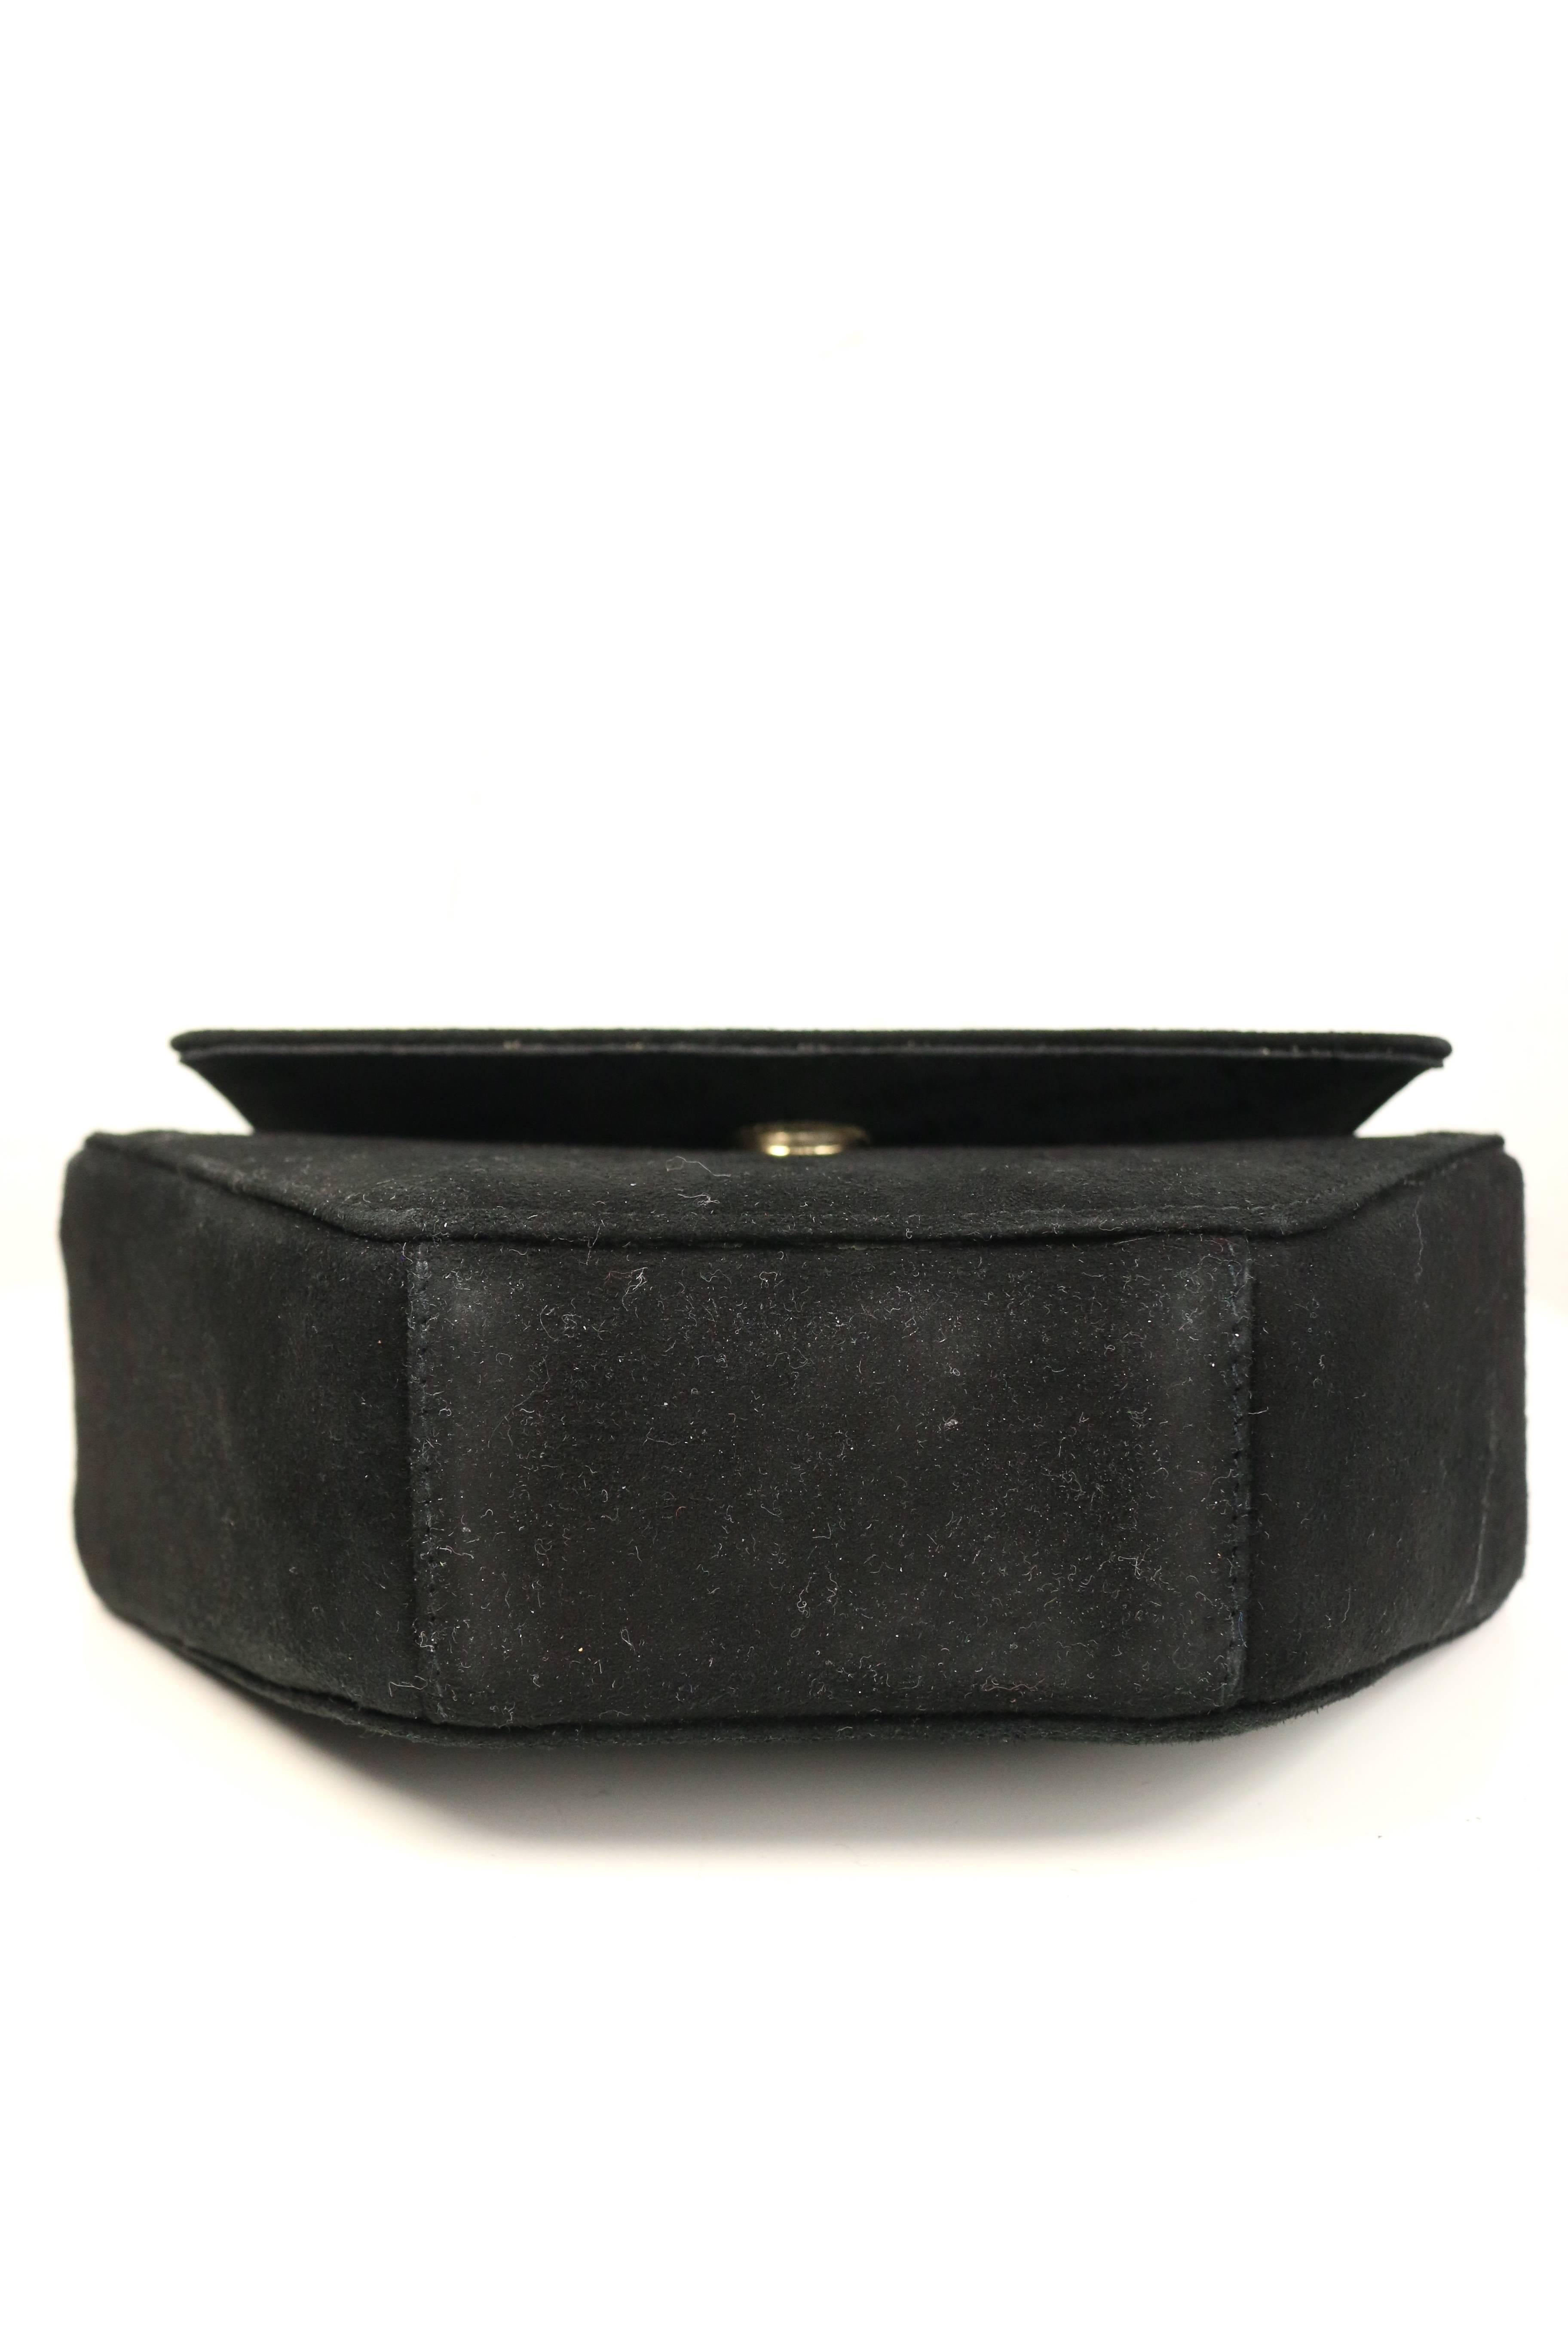 Rodo Black Suede Gold Toned Handle with Colour Stones Octagon Shoulder Bag  2